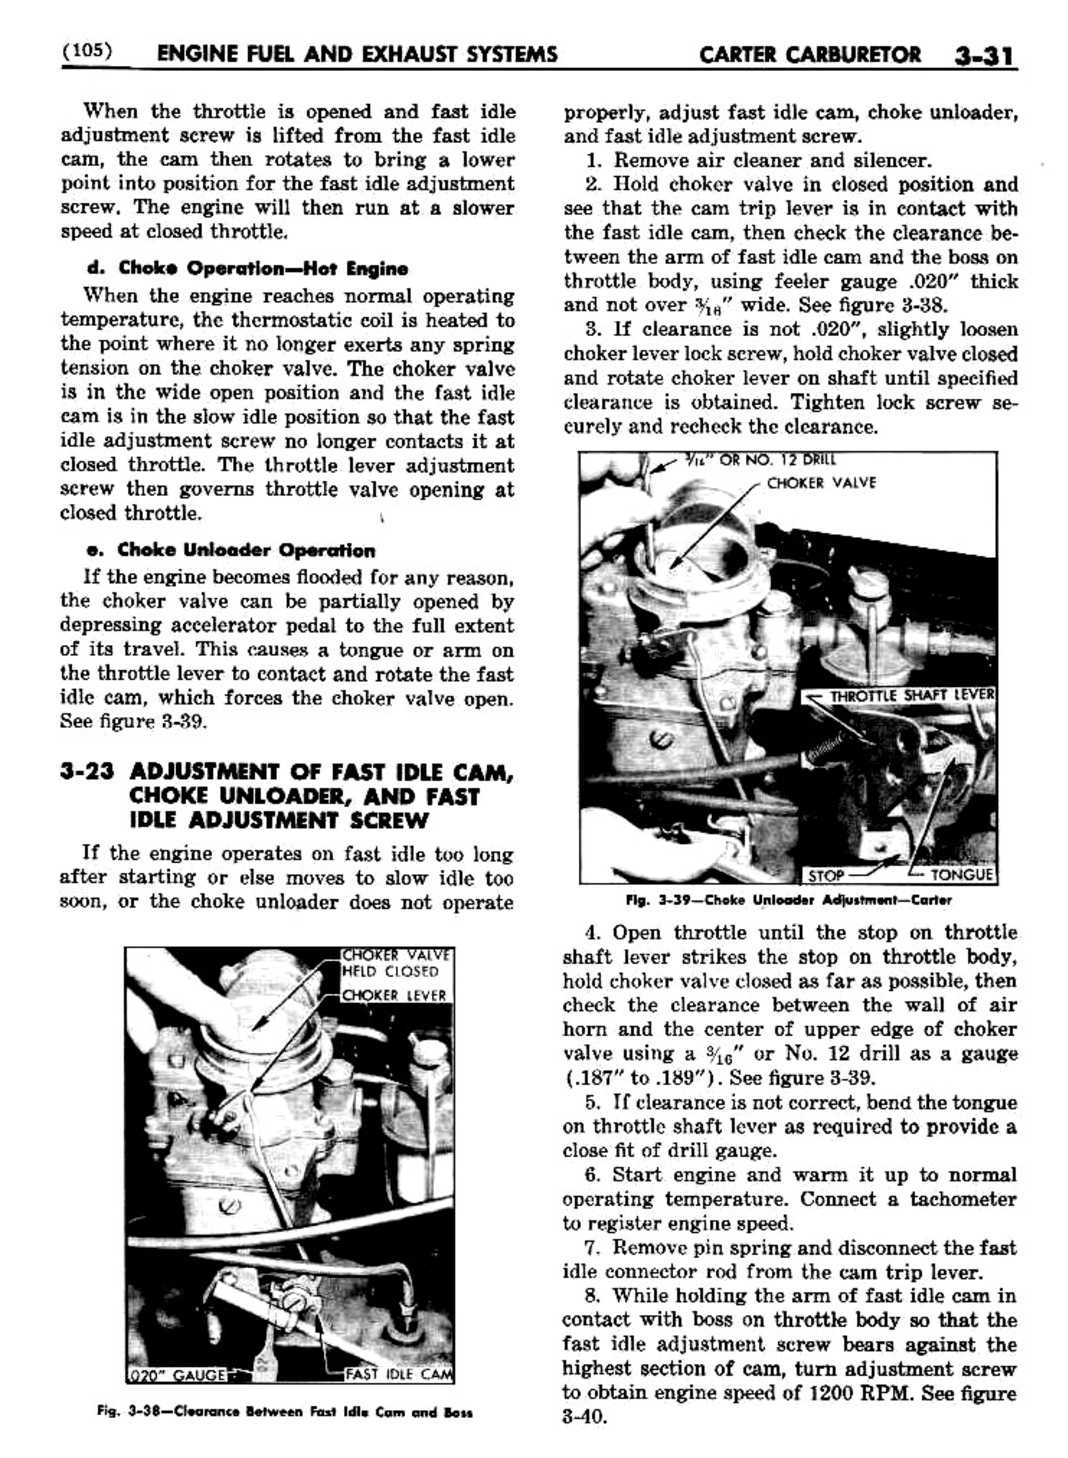 n_04 1948 Buick Shop Manual - Engine Fuel & Exhaust-031-031.jpg